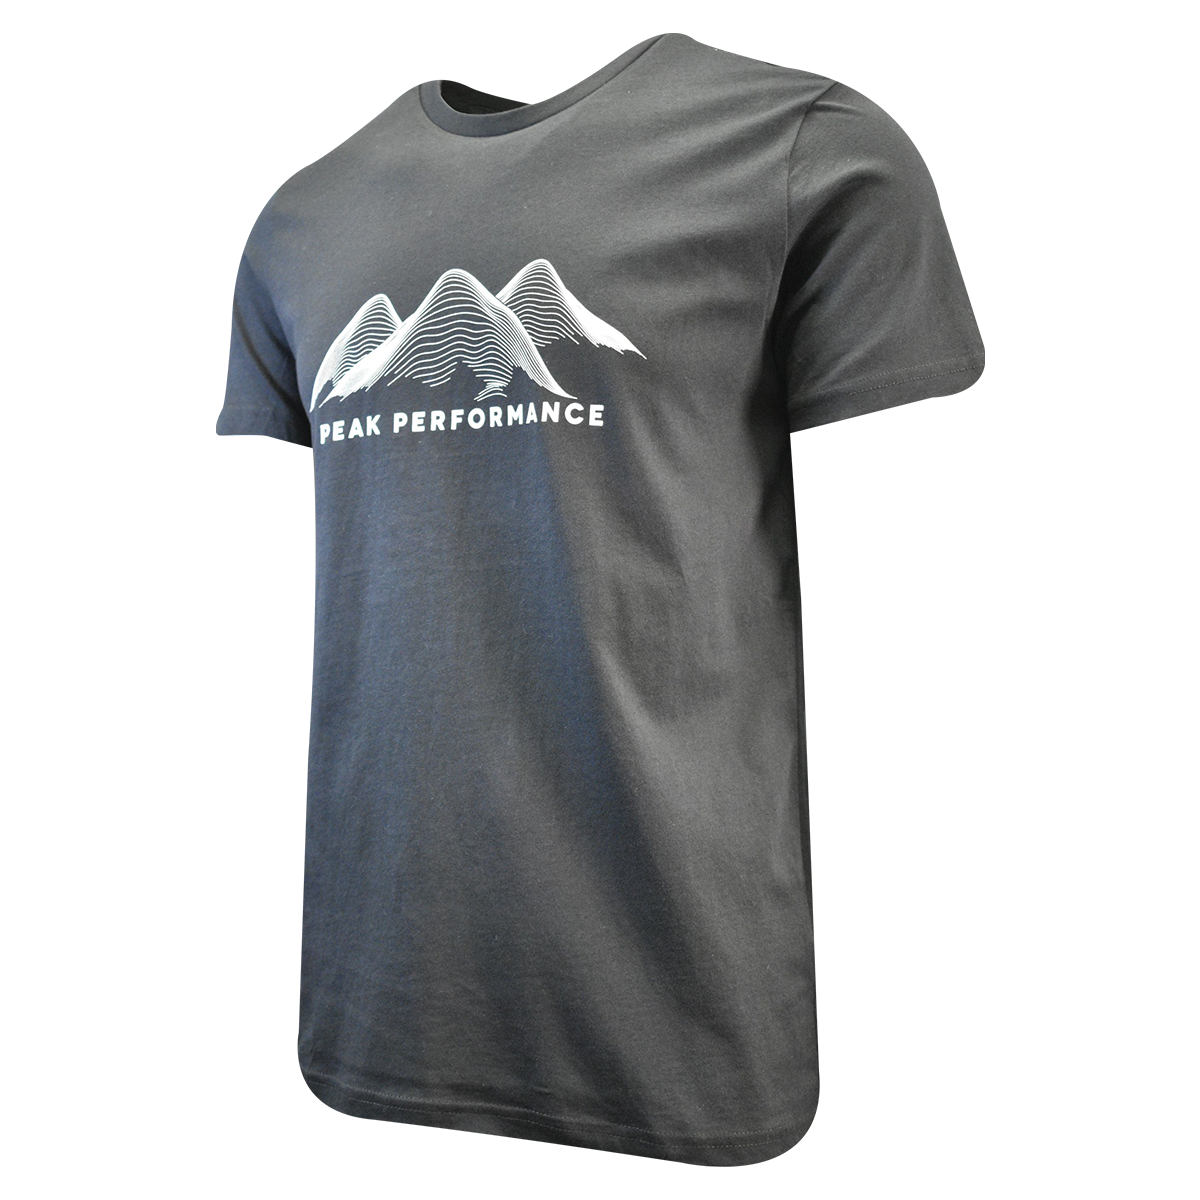 Peak Performance Men's T-Shirt Black Mountain Waves S/S Tee (S07)